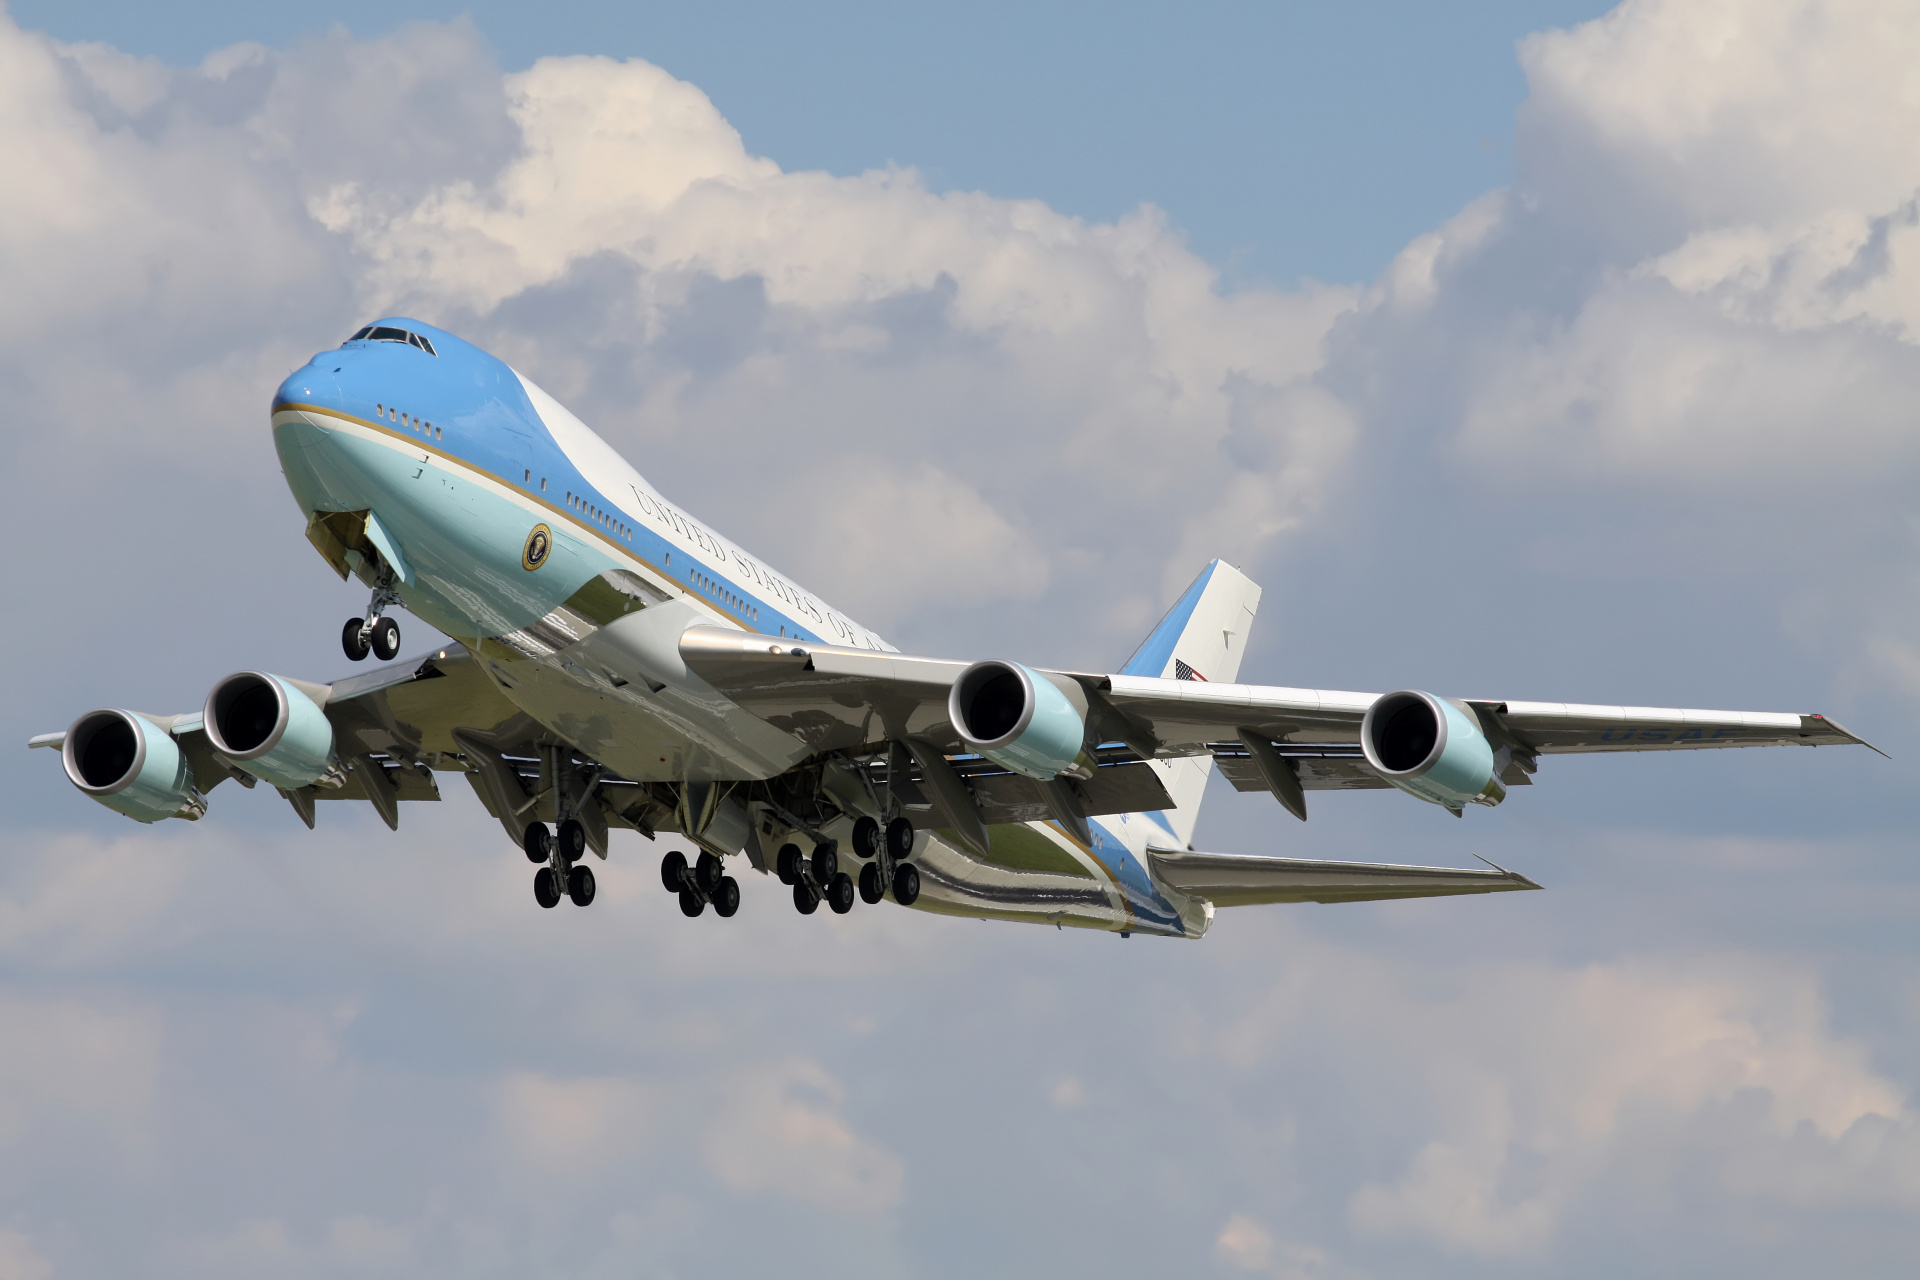 92-9000, U.S. Air Force (Aircraft » EPWA Spotting » Boeing 747-200 » VC-25A)